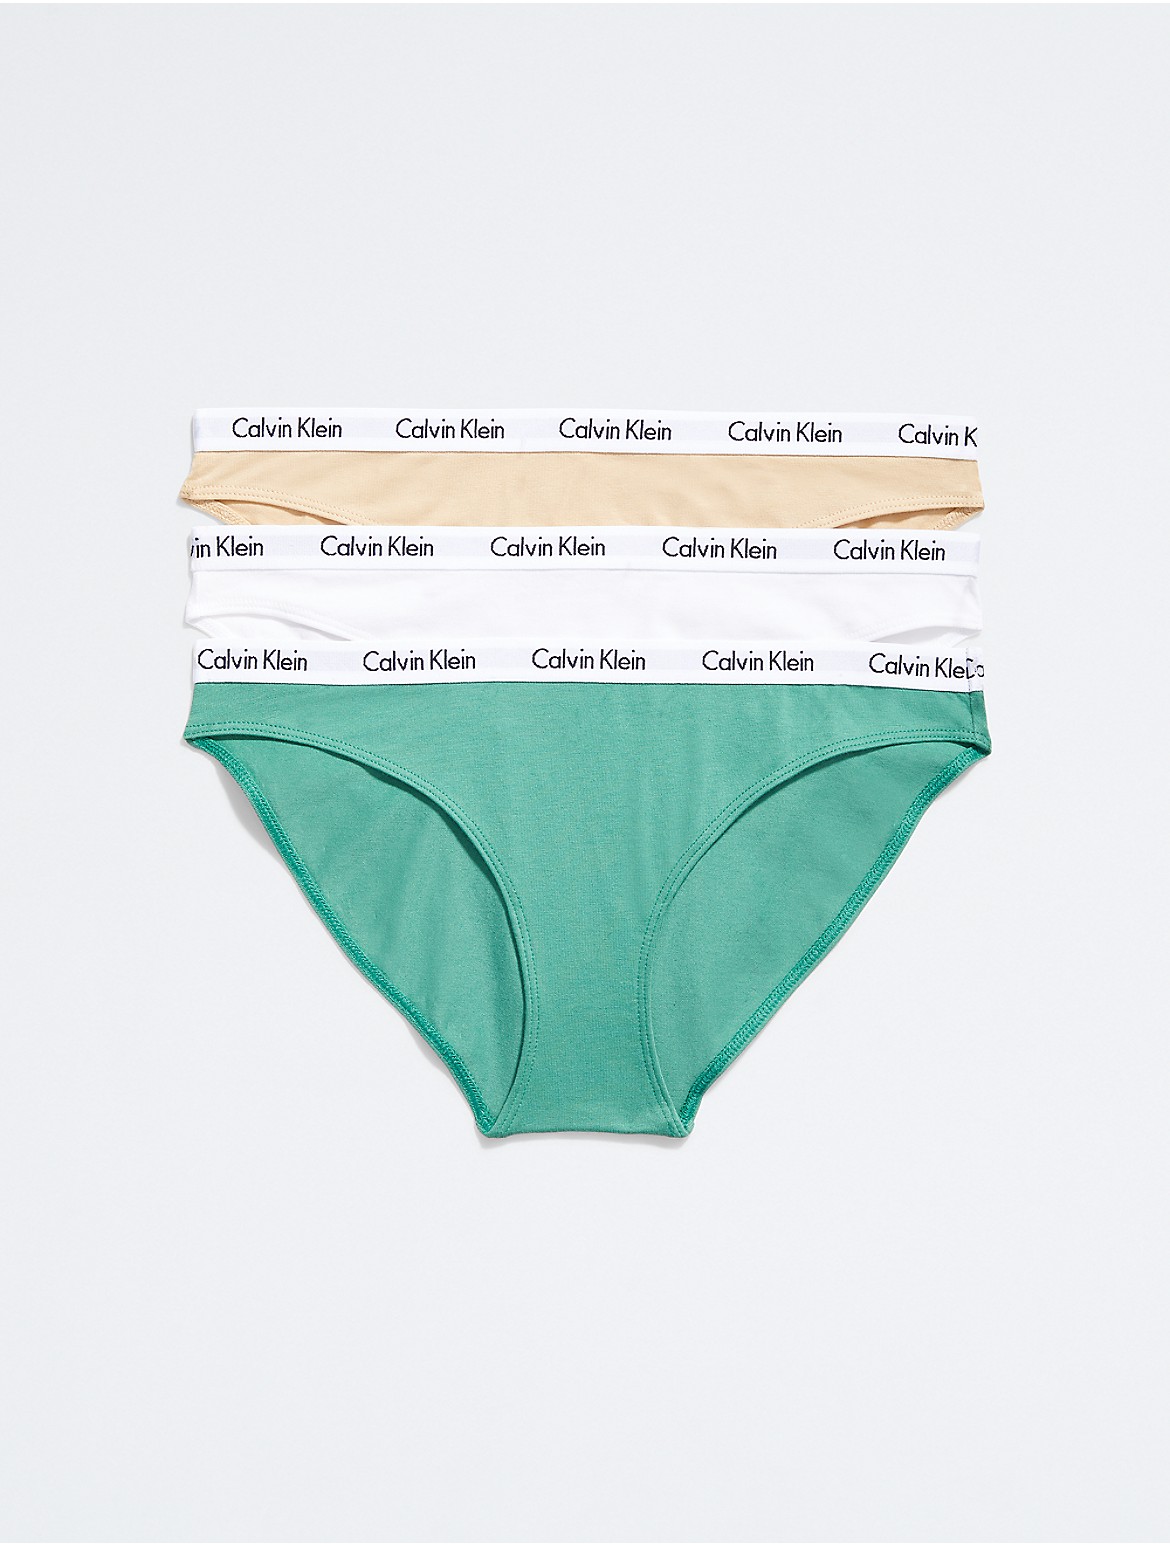 Calvin Klein Women's Carousel Logo Cotton 3-Pack Bikini - Multi - XS